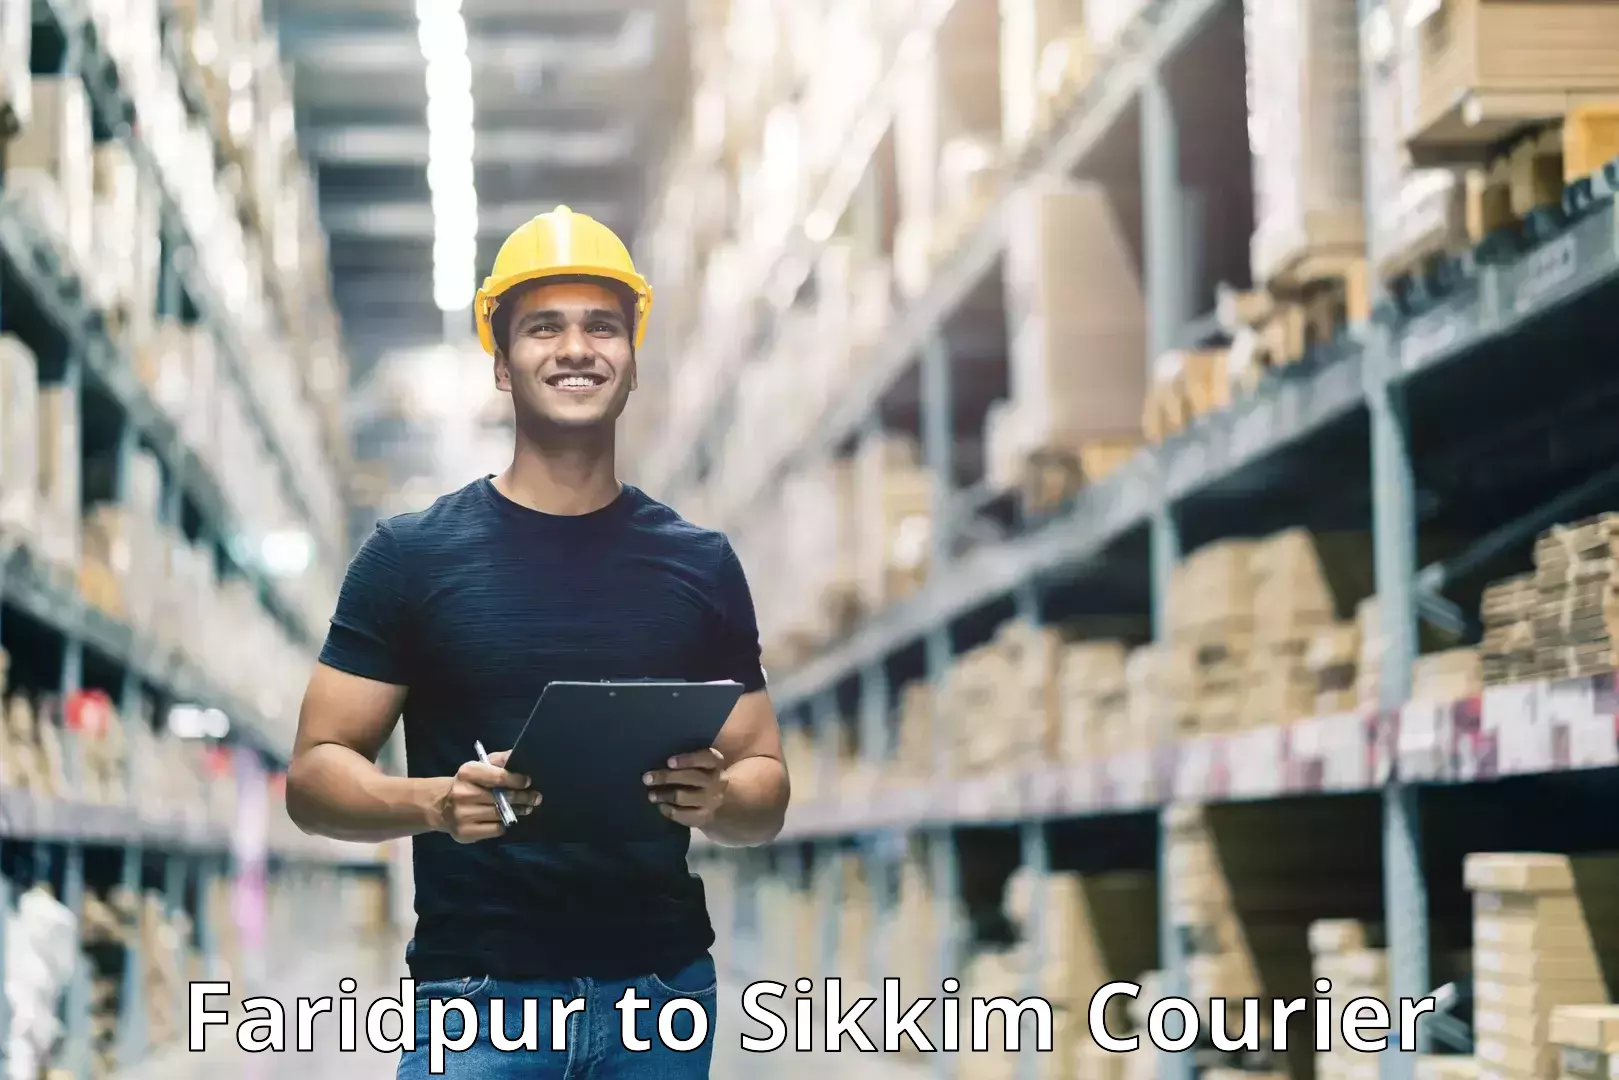 Courier service comparison Faridpur to East Sikkim